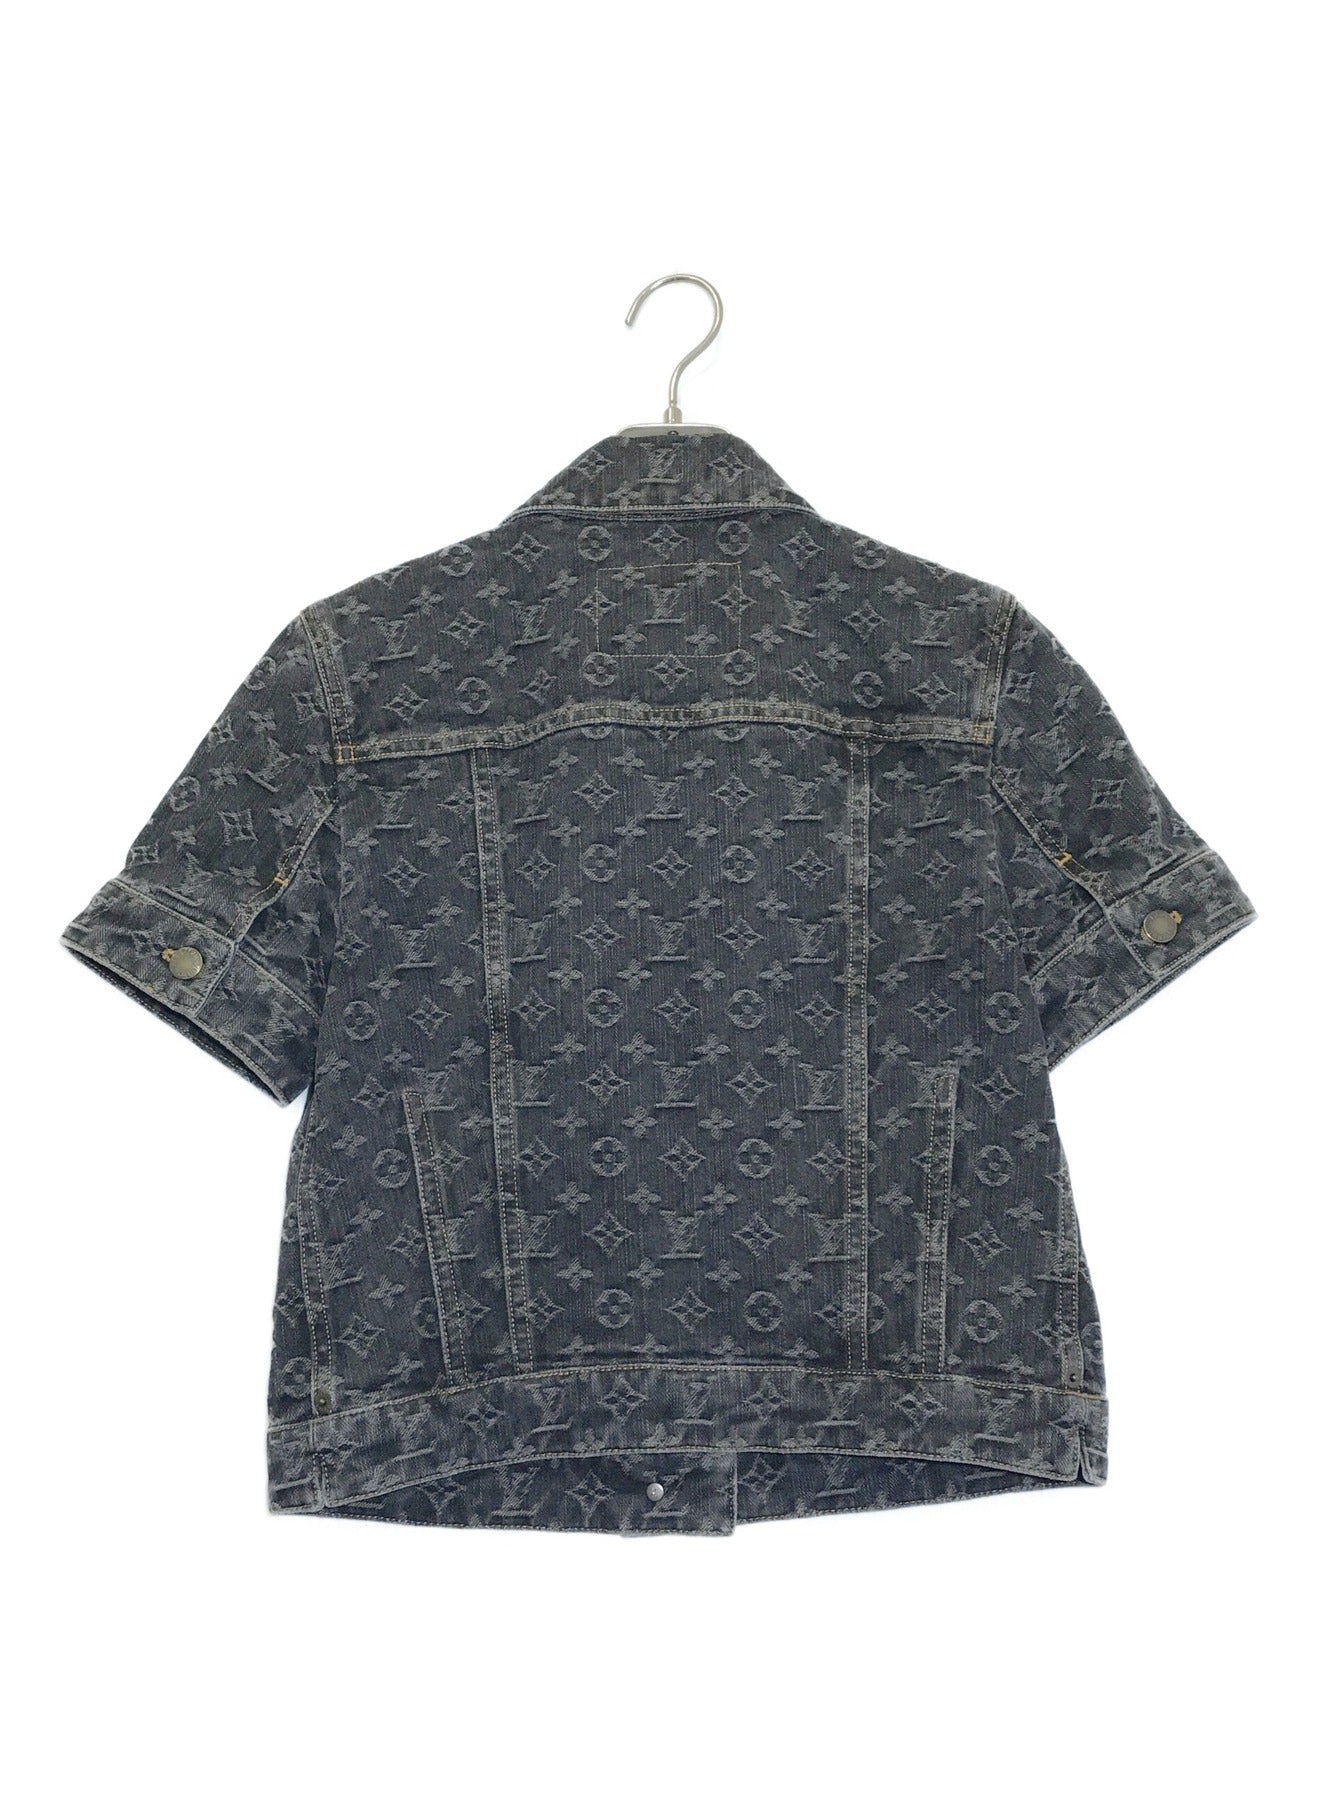 Louis Vuitton denim jacket